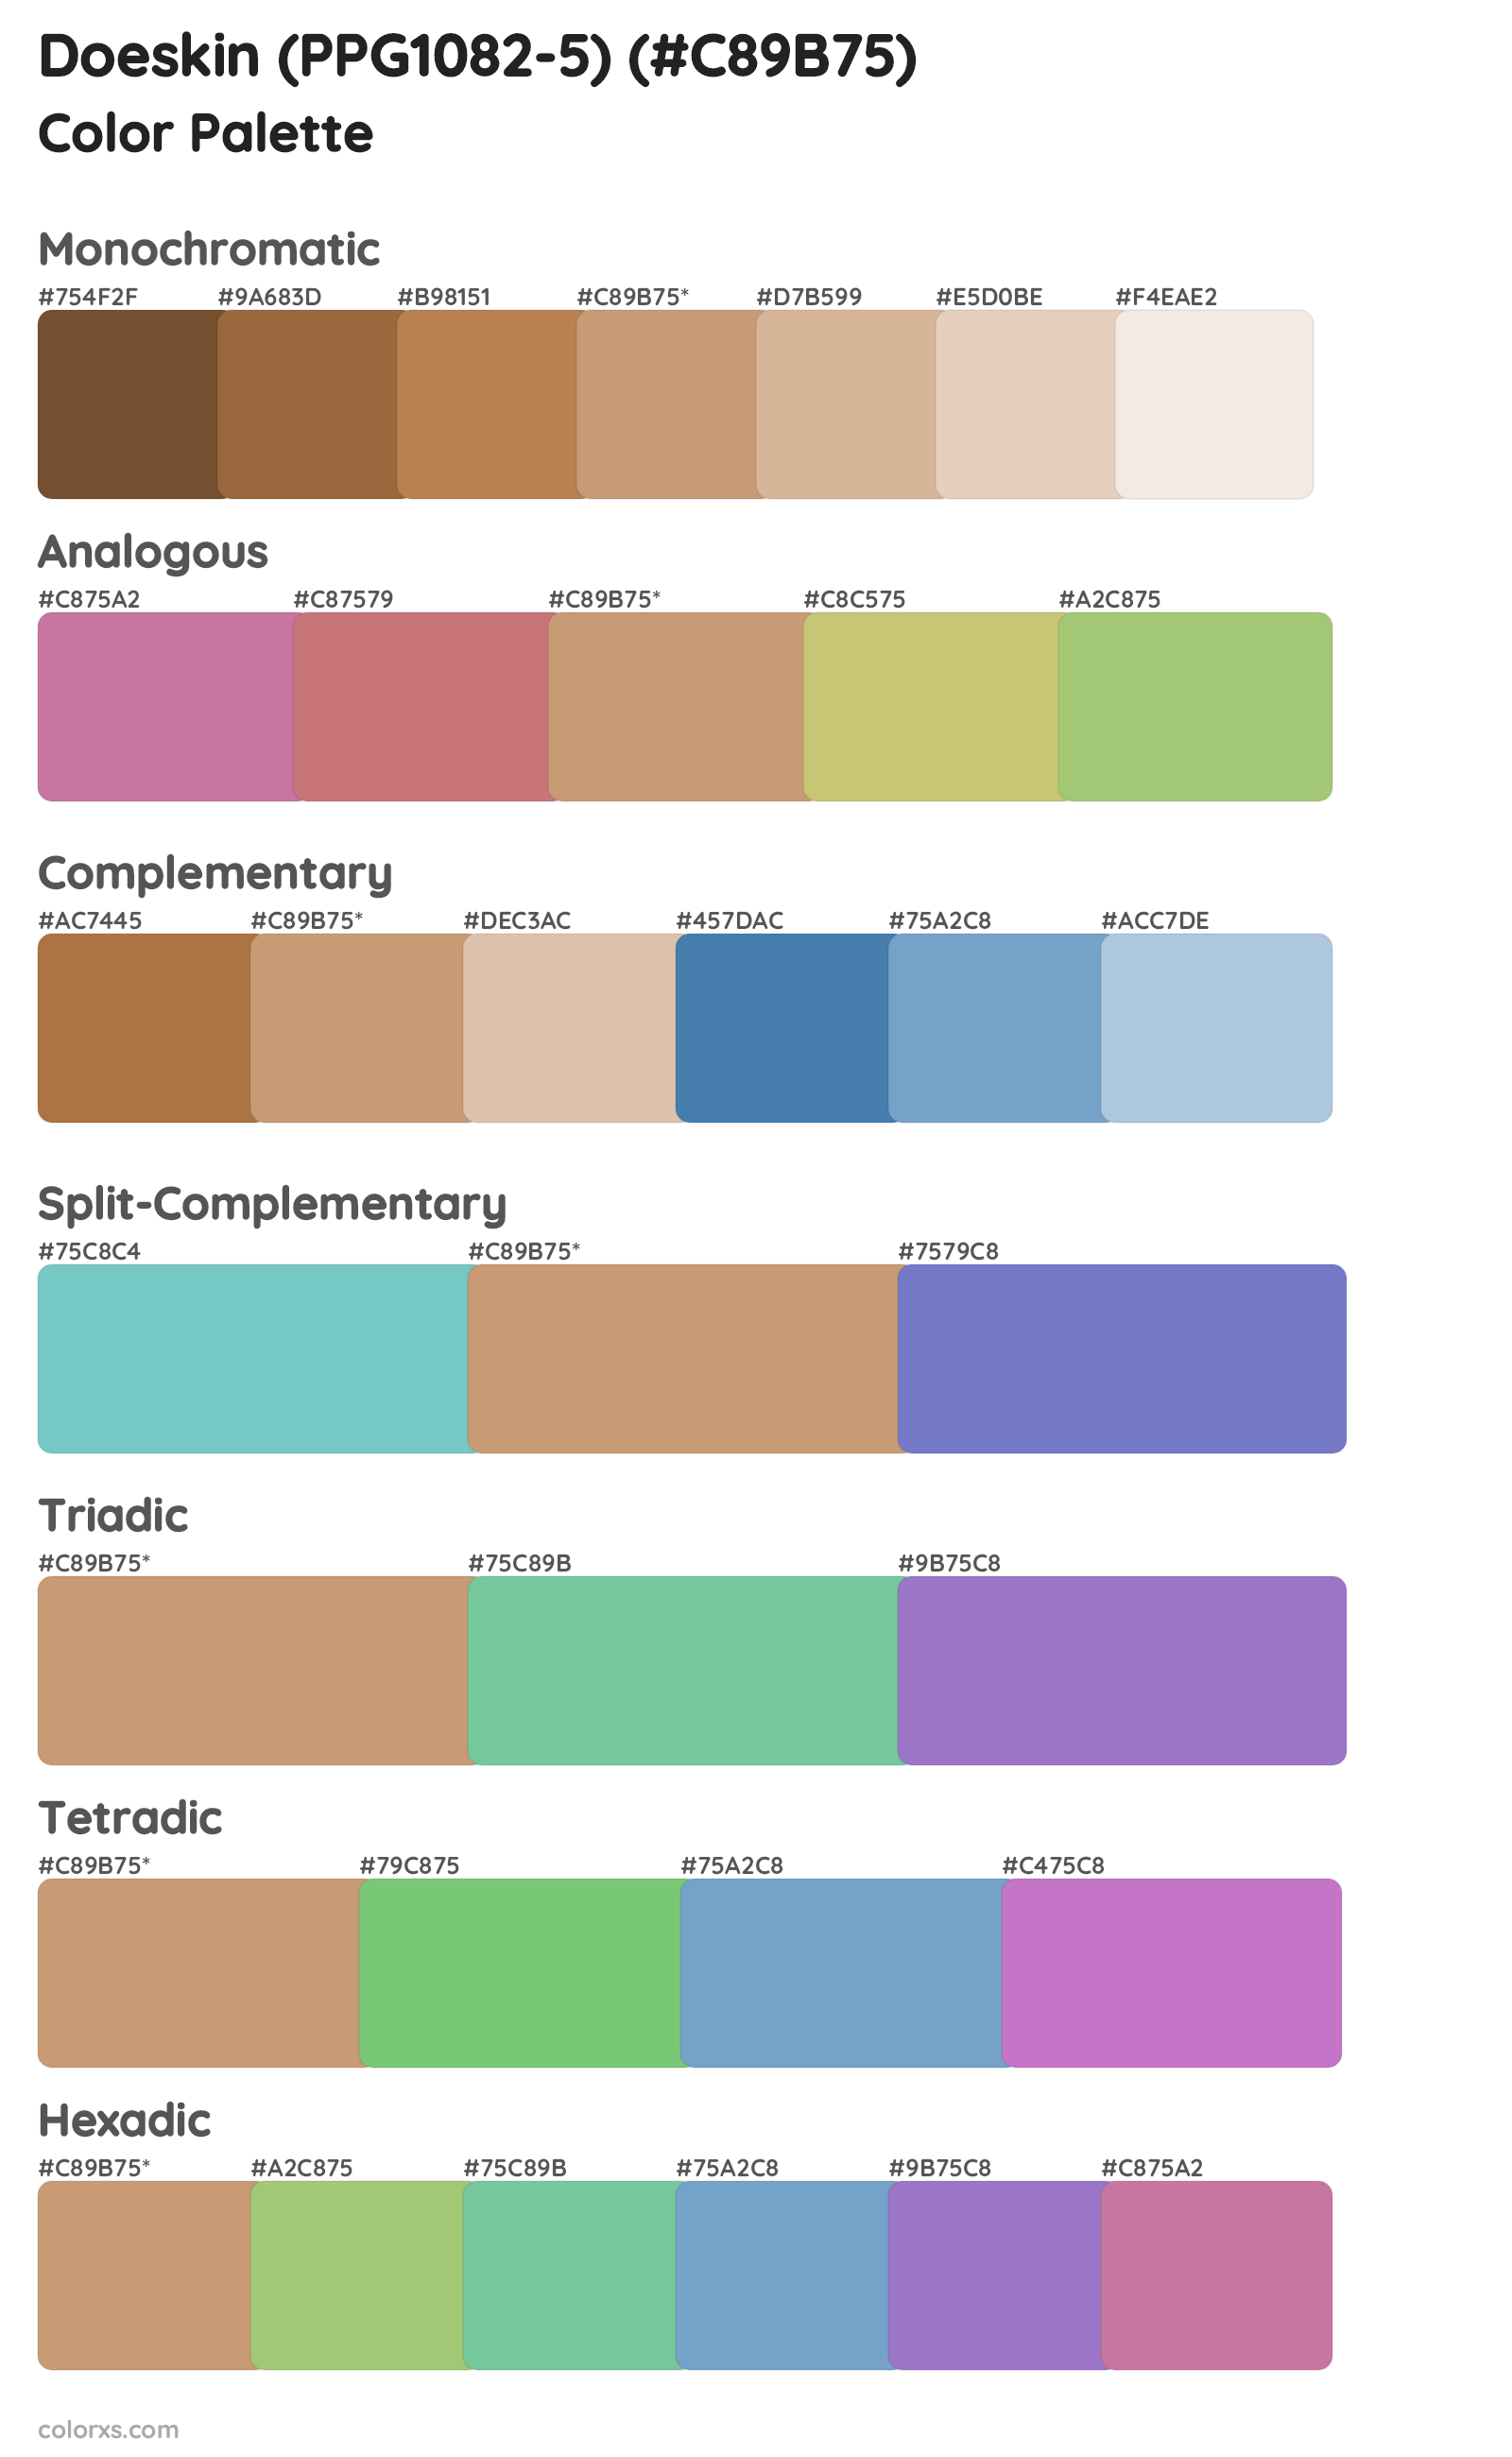 Doeskin (PPG1082-5) Color Scheme Palettes